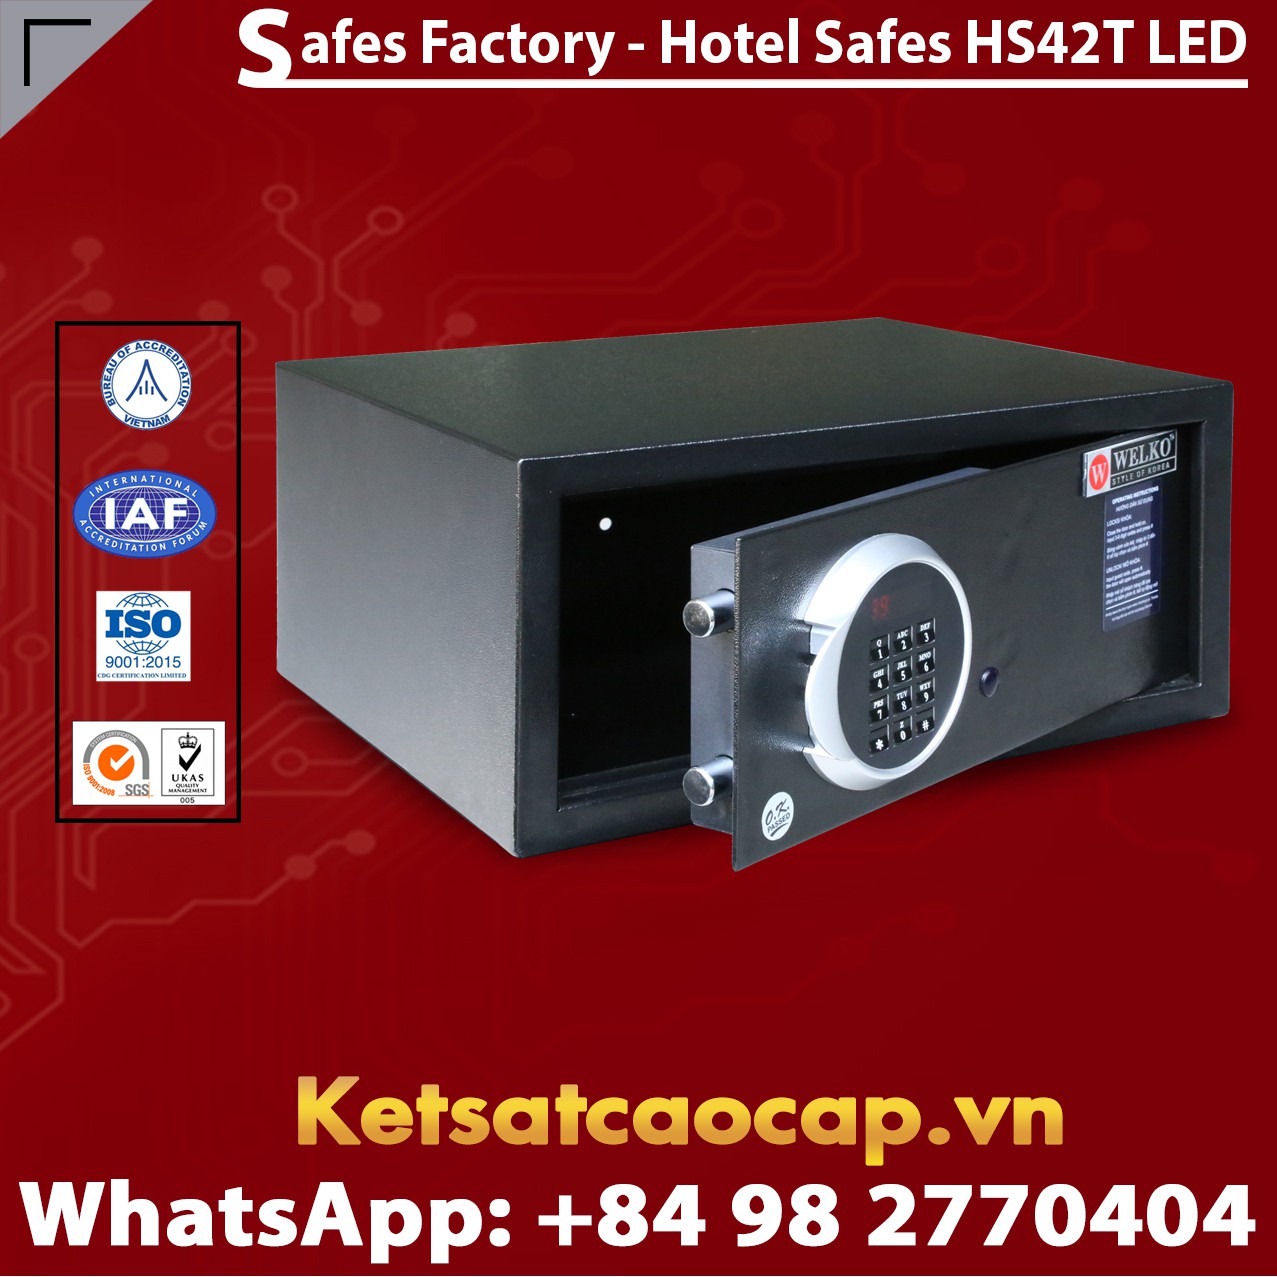 Hotel Safety Deposit Box WELKO HS42T LED